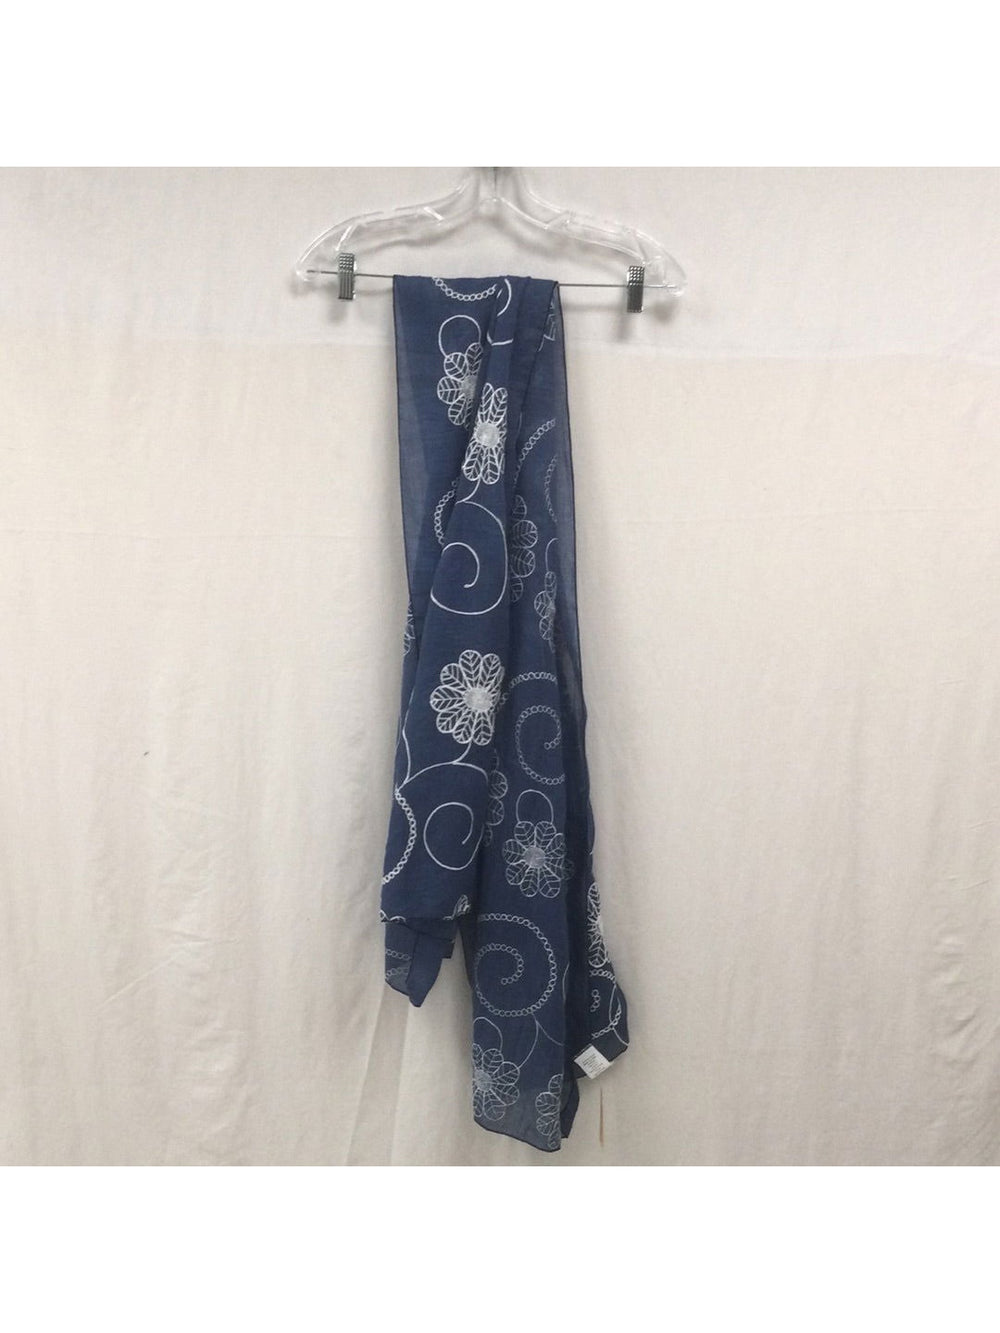 Ganz Ladies One Size White & Blue Flower Twilled Scarf - The Kennedy Collective Thrift - 